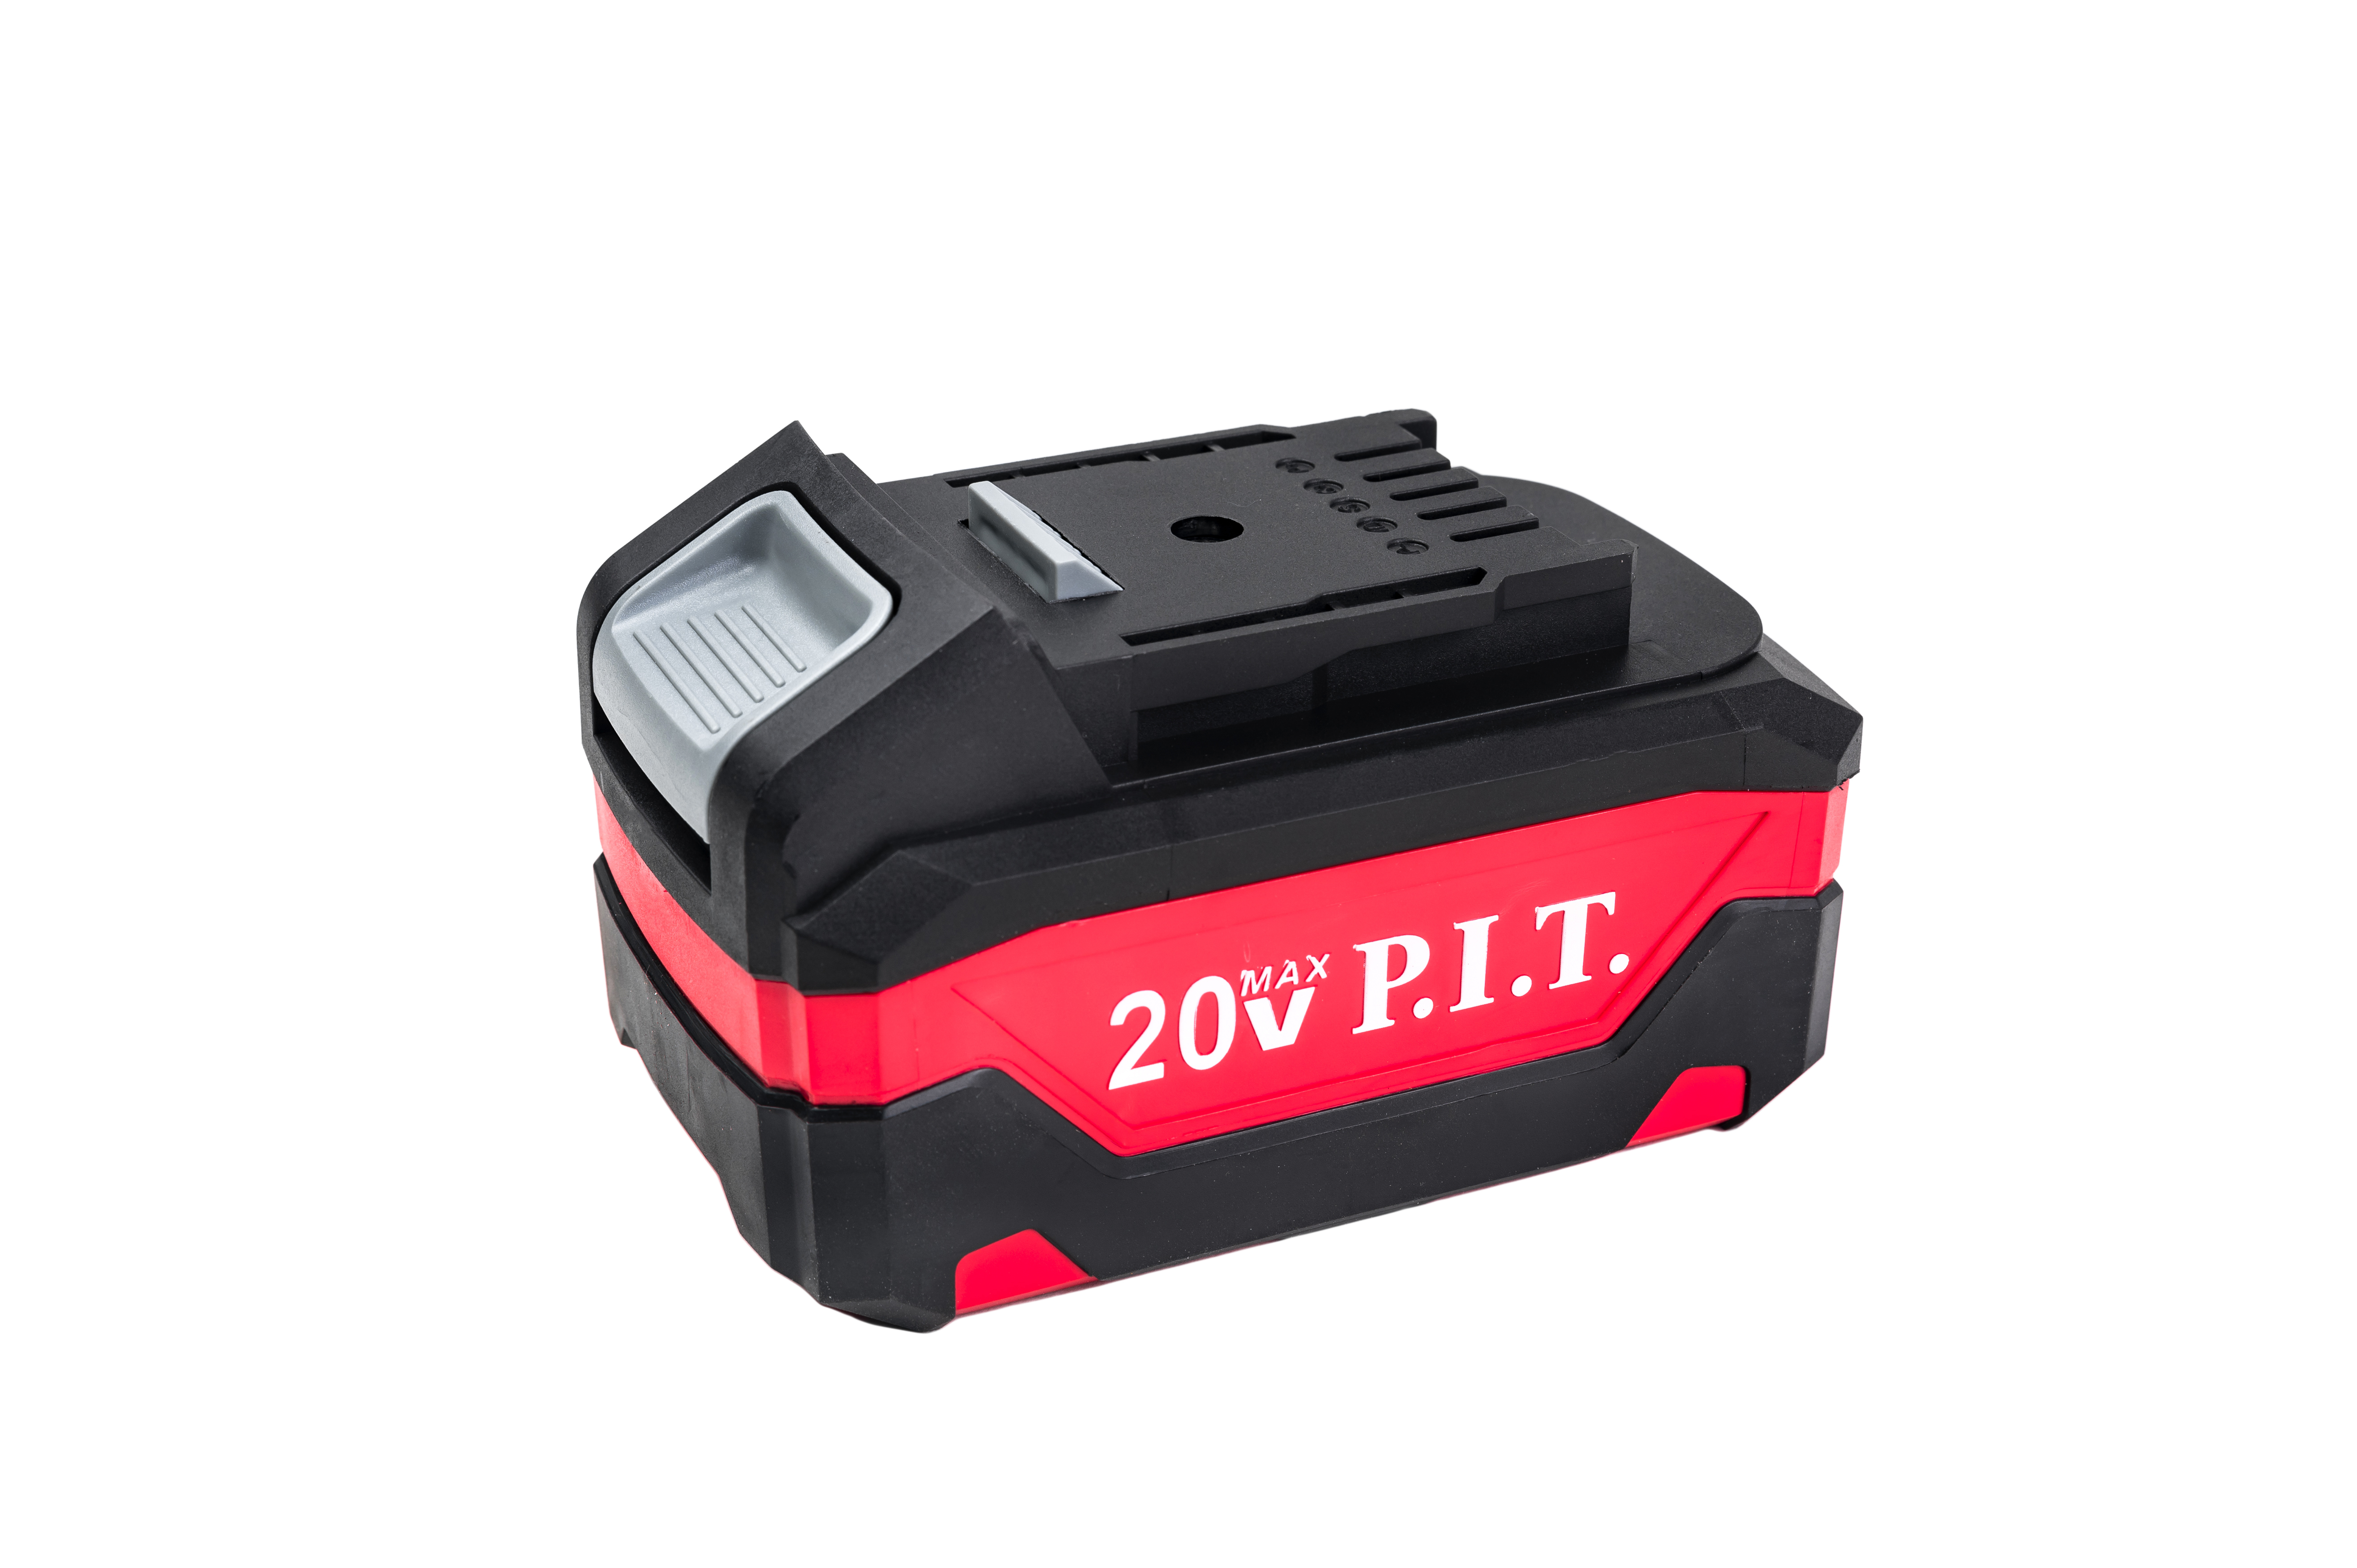 Battery 0. Аккумулятор ONEPOWER P.I.T. ph20-3.0. Аккумулятор Pit 18v 1.5Ah. Аккумулятор ONEPOWER ph20-2.0 p.i.t. (20в, 2ач, li-ion). Аккумулятор Pit ph20-2.0.